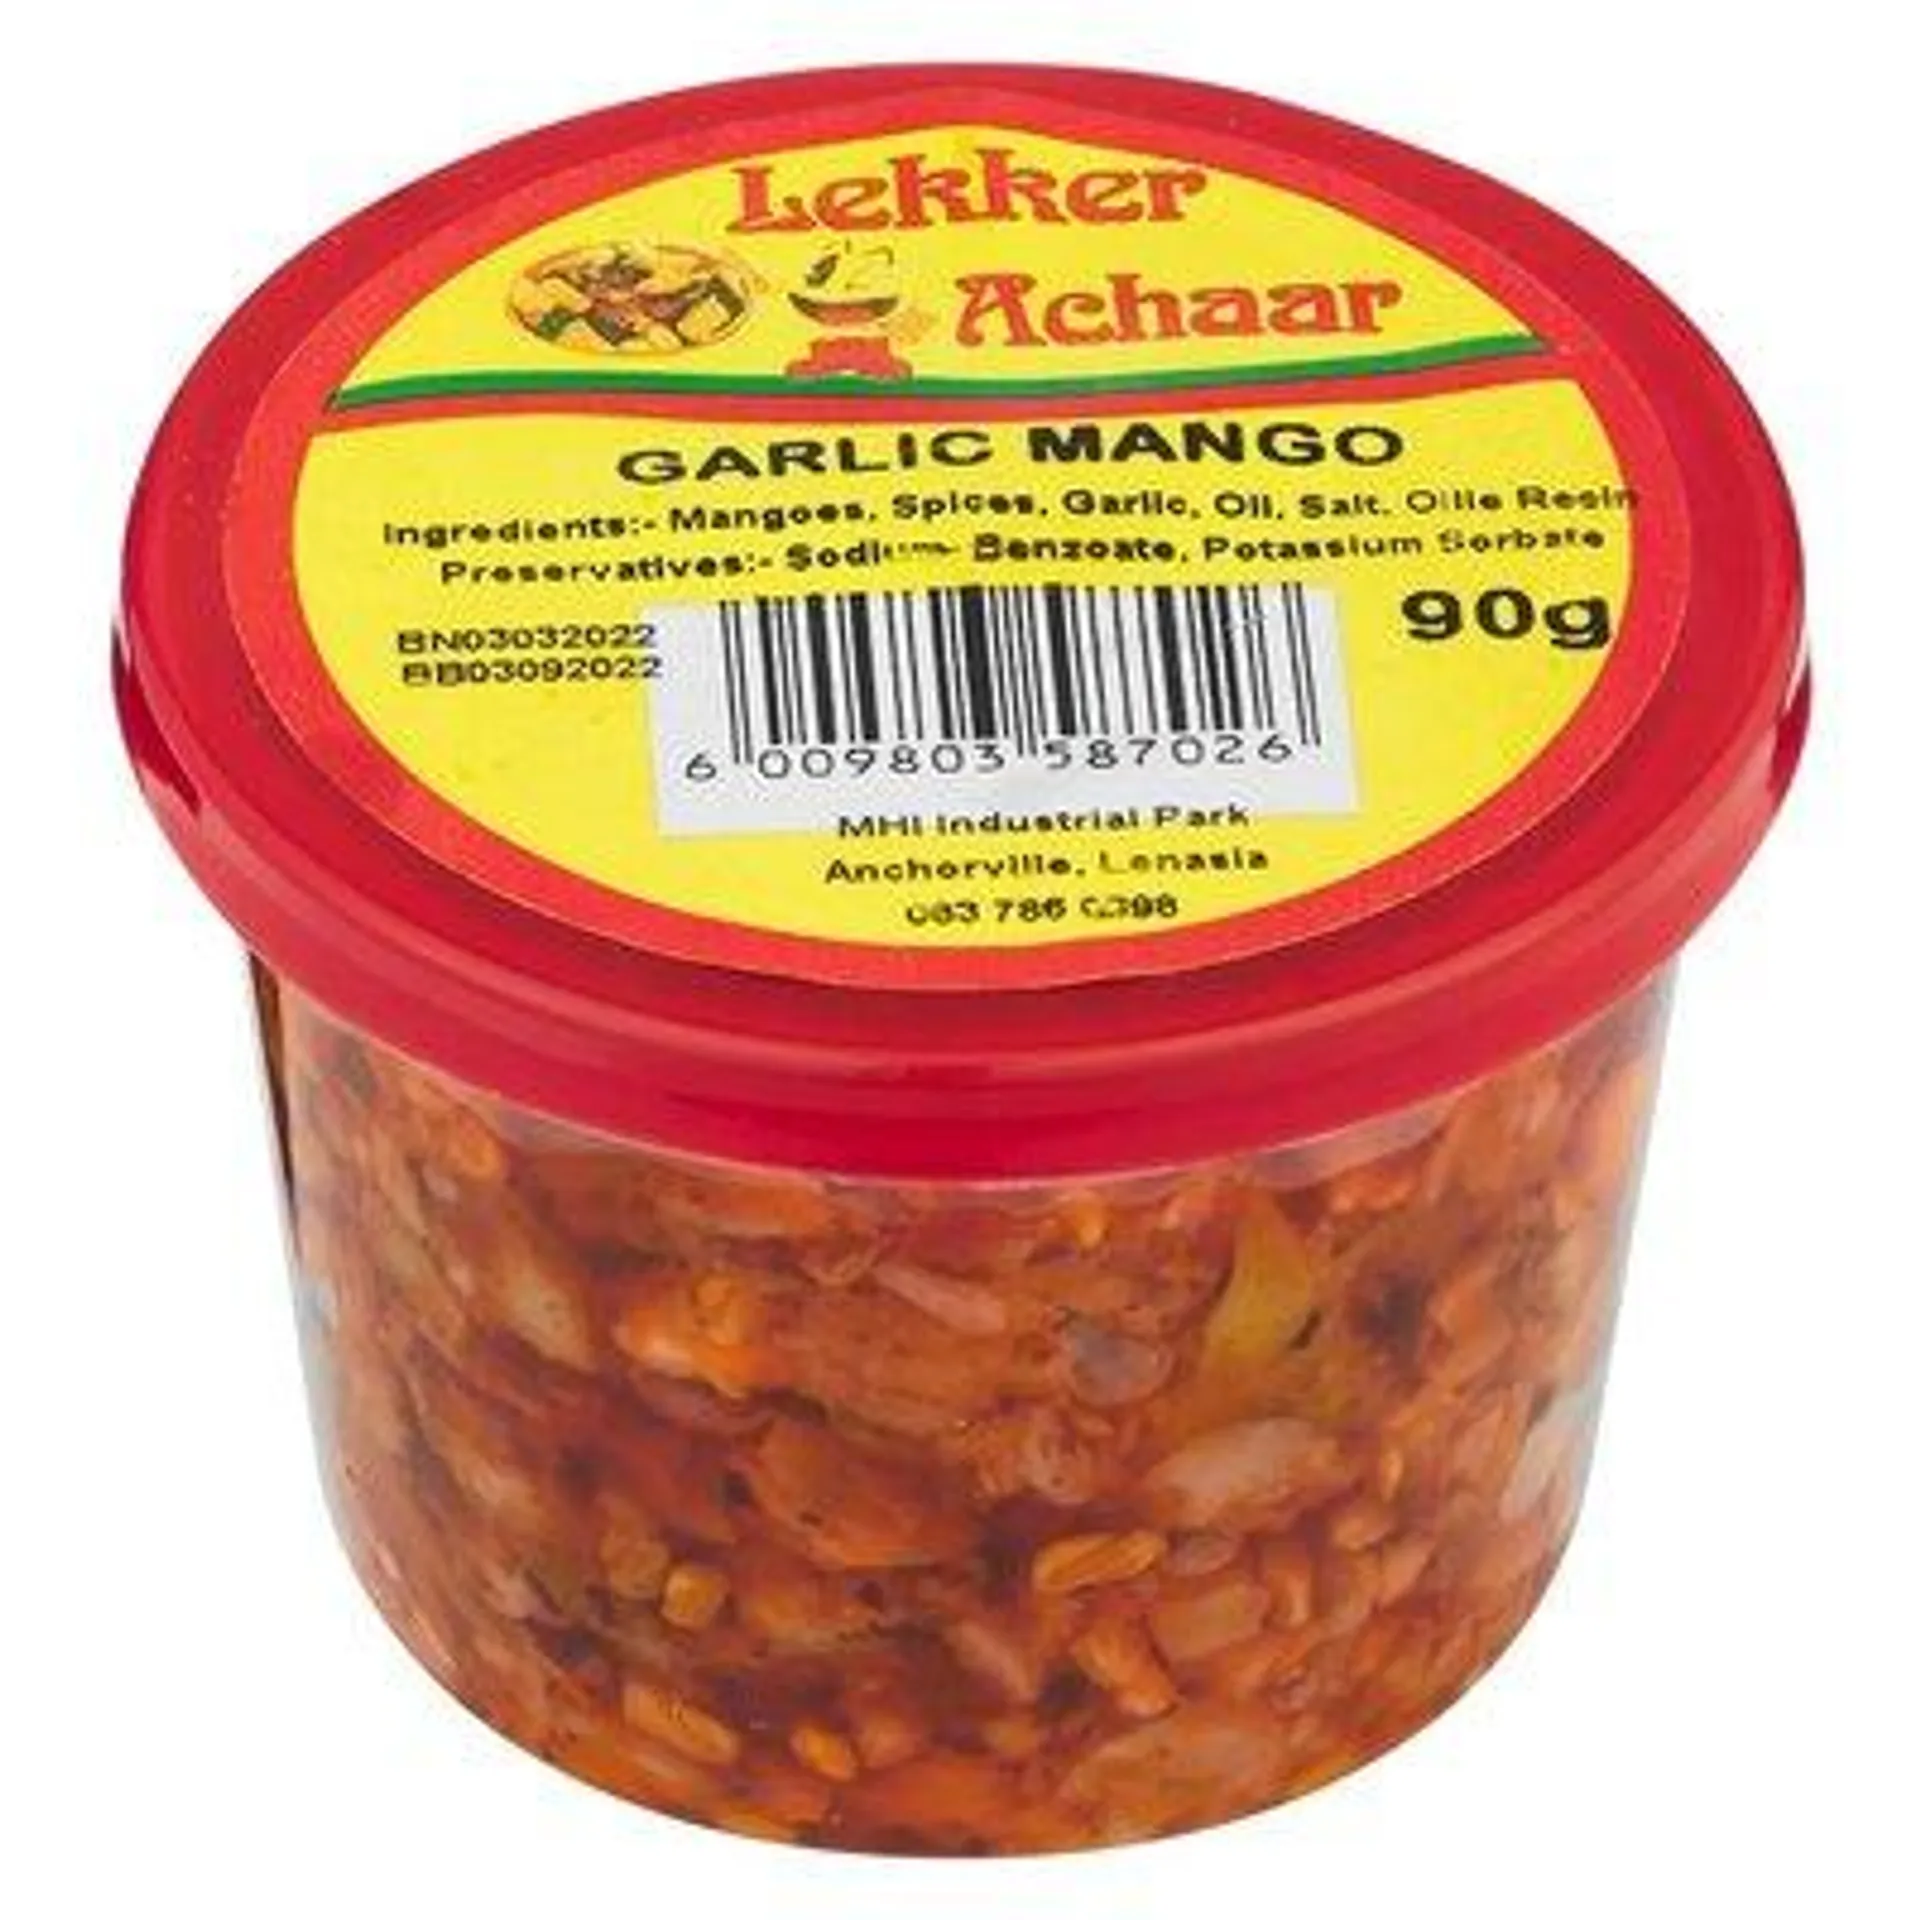 Lekker Mango Garlic Achaar 90g